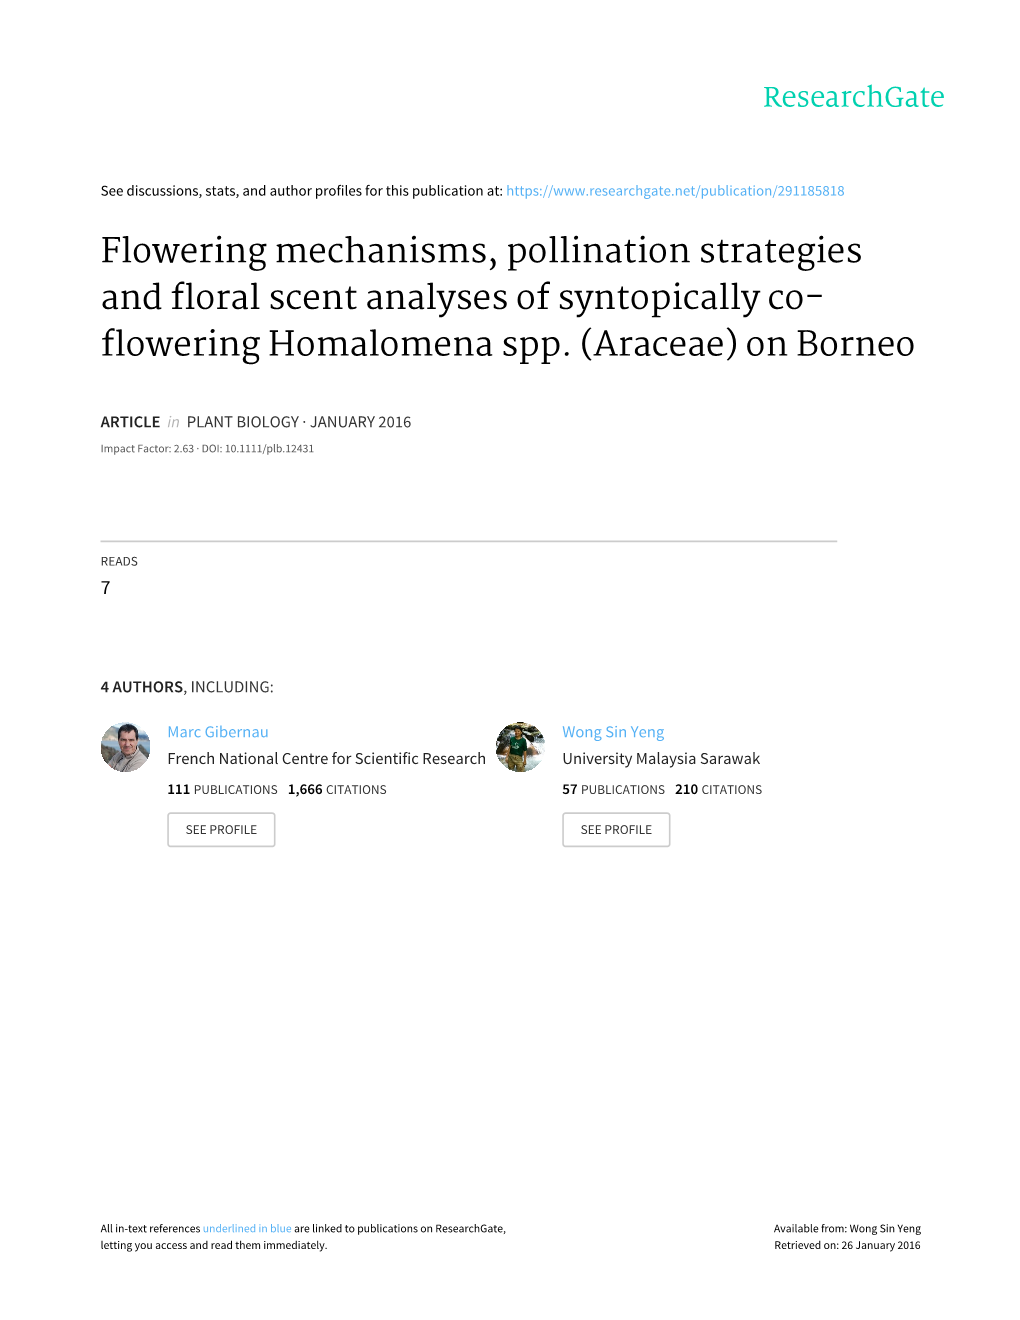 Flowering Homalomena Spp. (Araceae) on Borneo